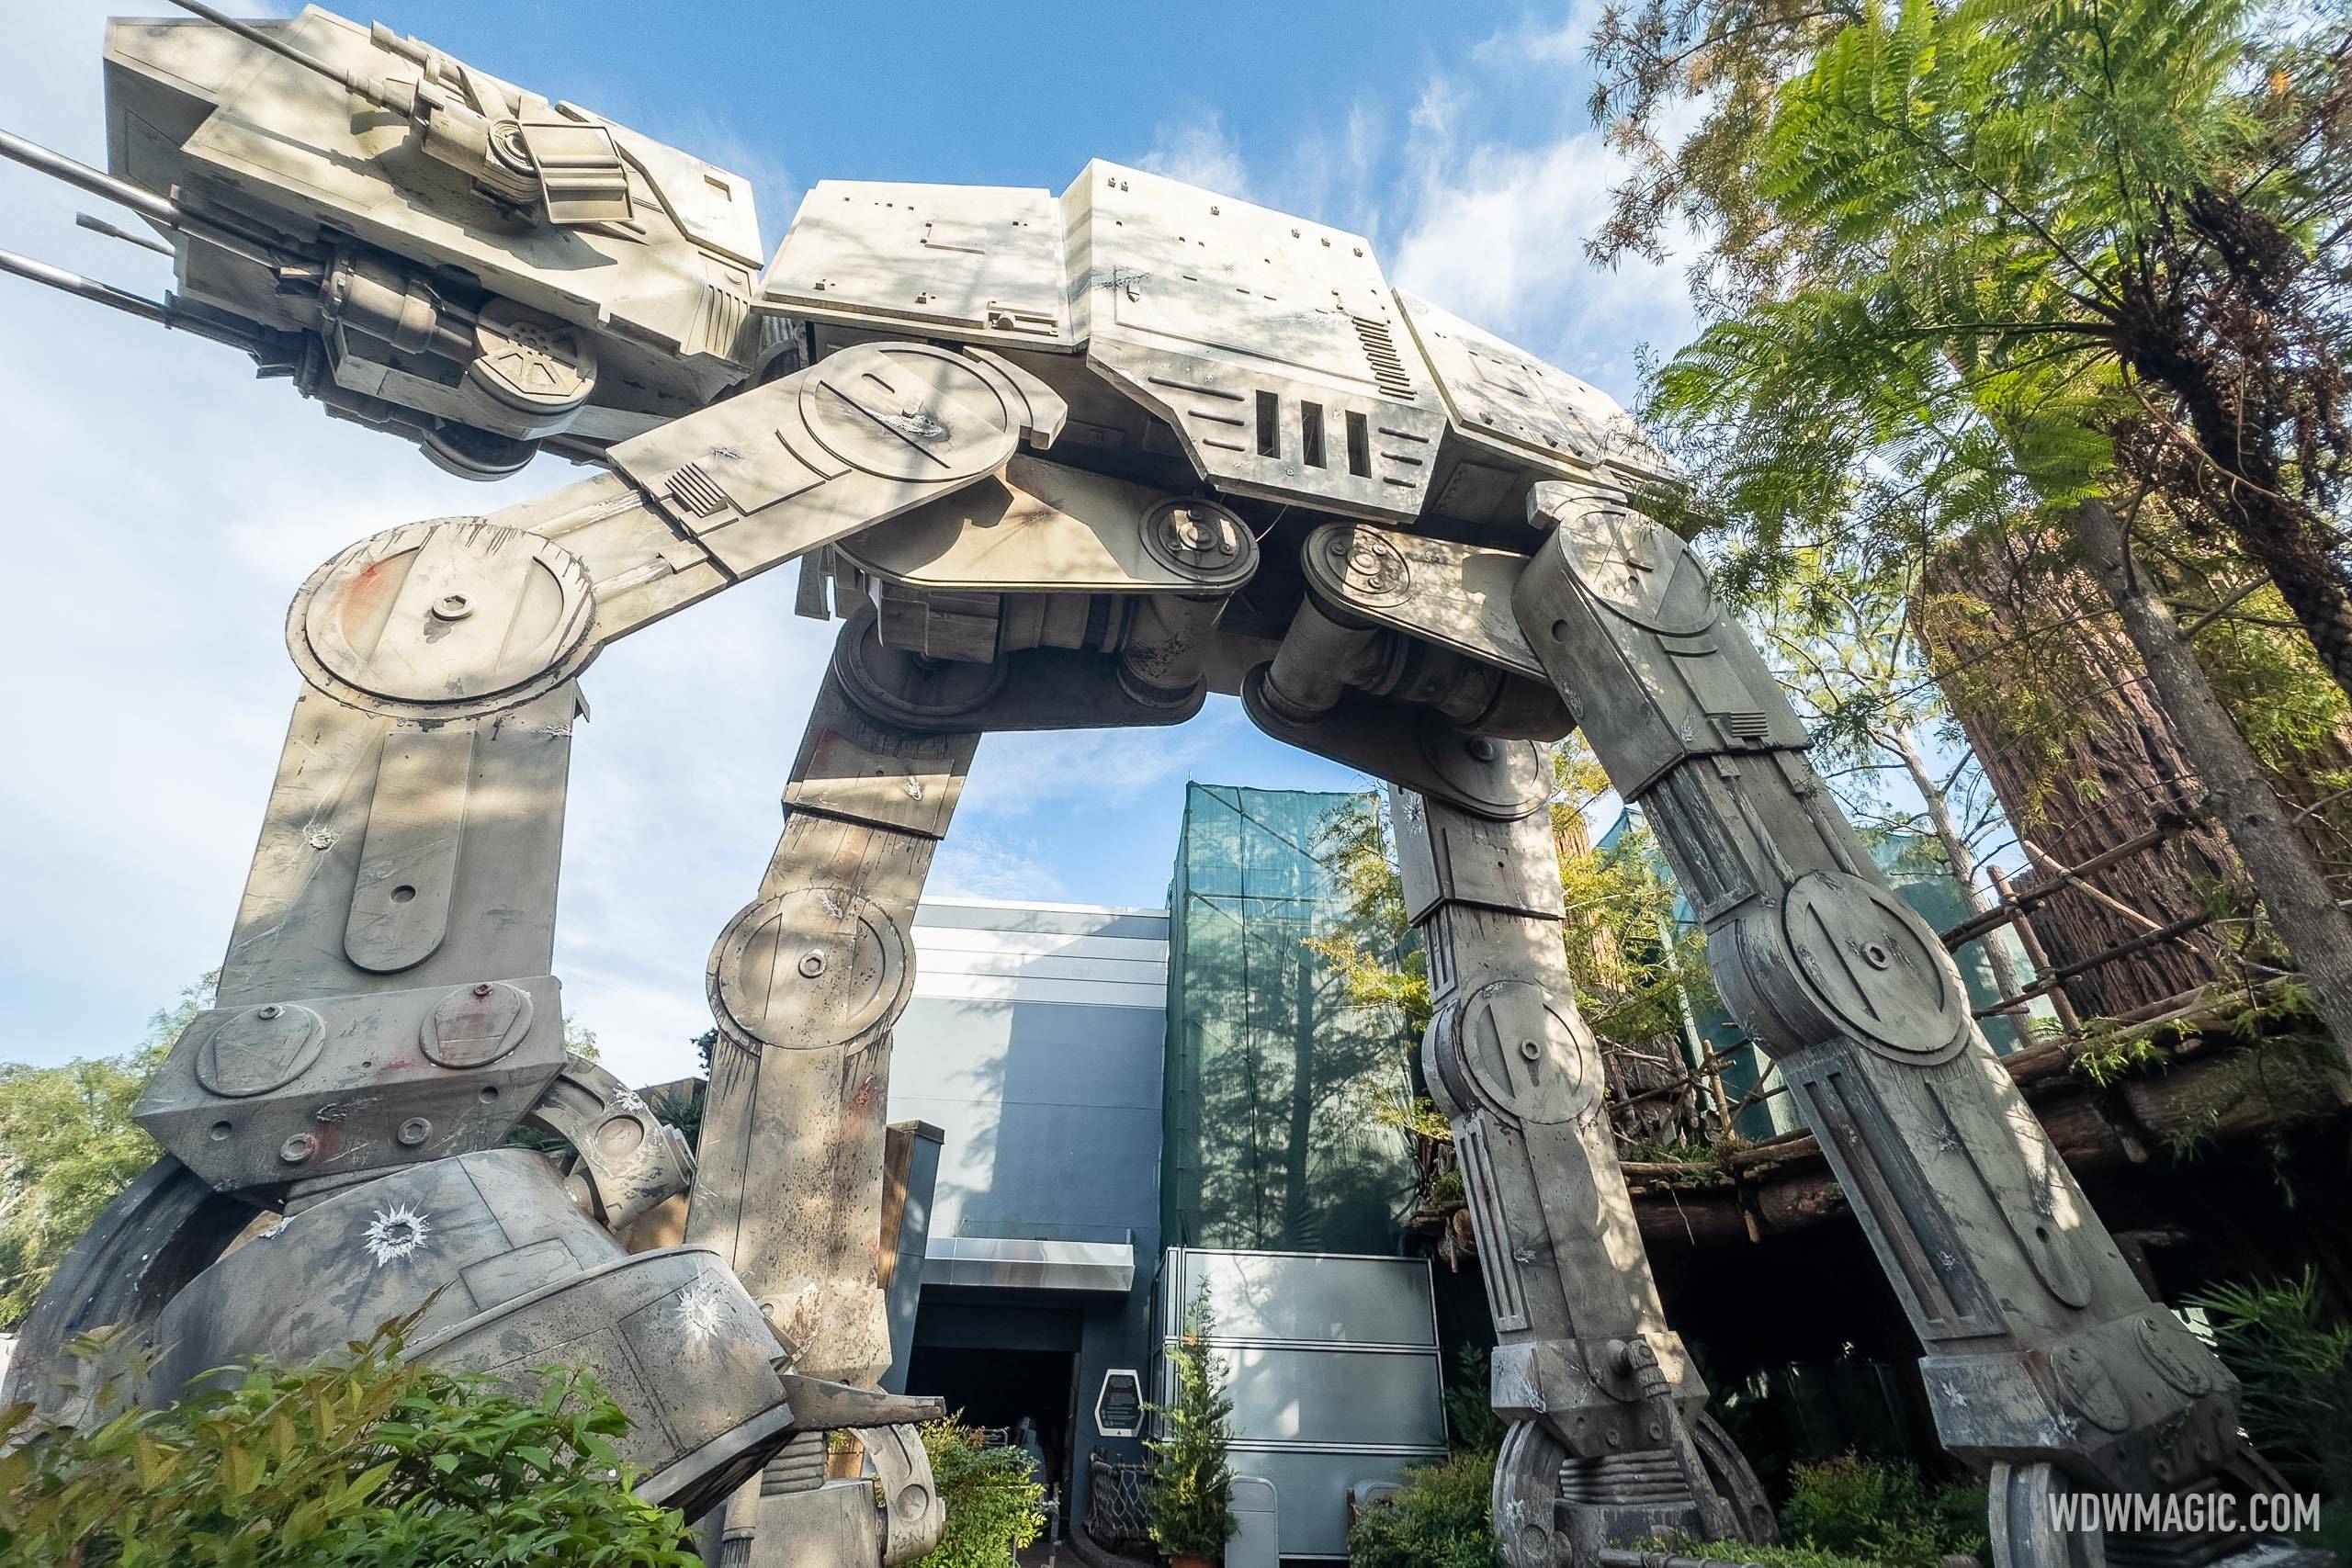 Exterior refurbishment continues at Star Tours in Disney's Hollywood Studios